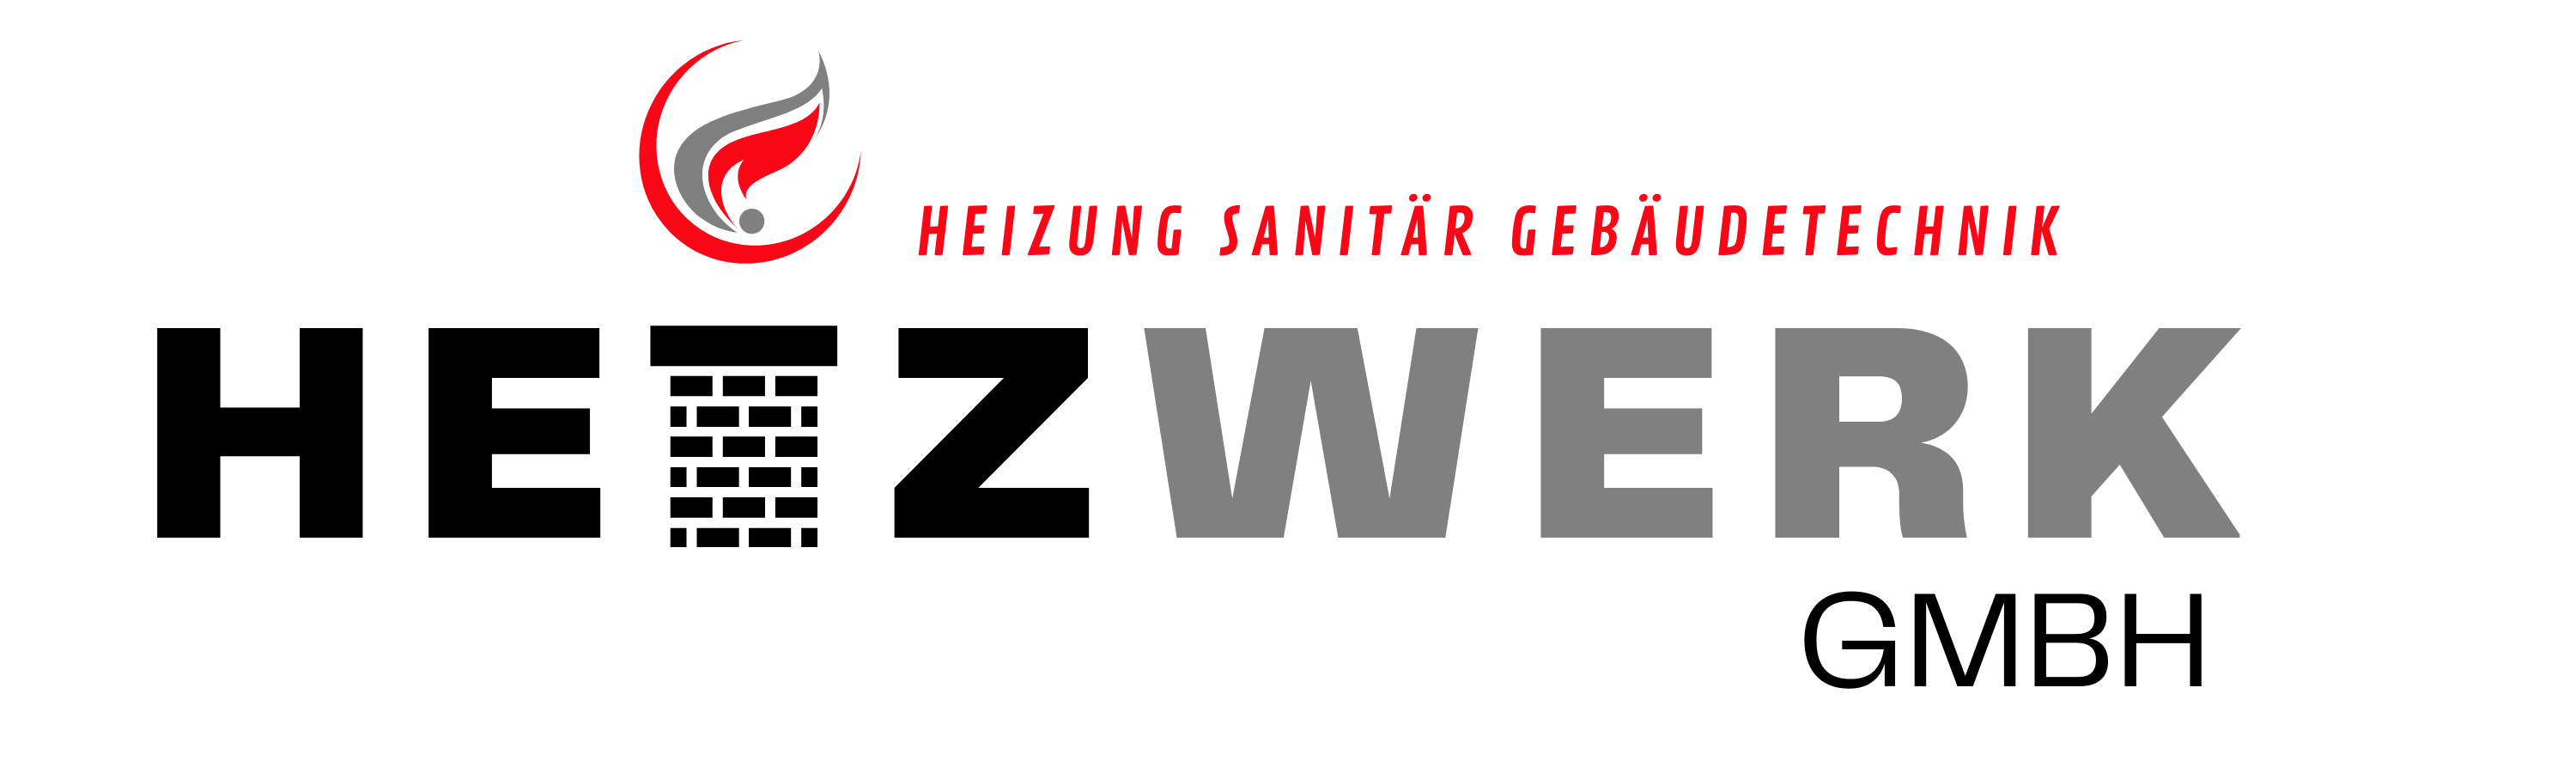 Heizwerk Logo schwarz